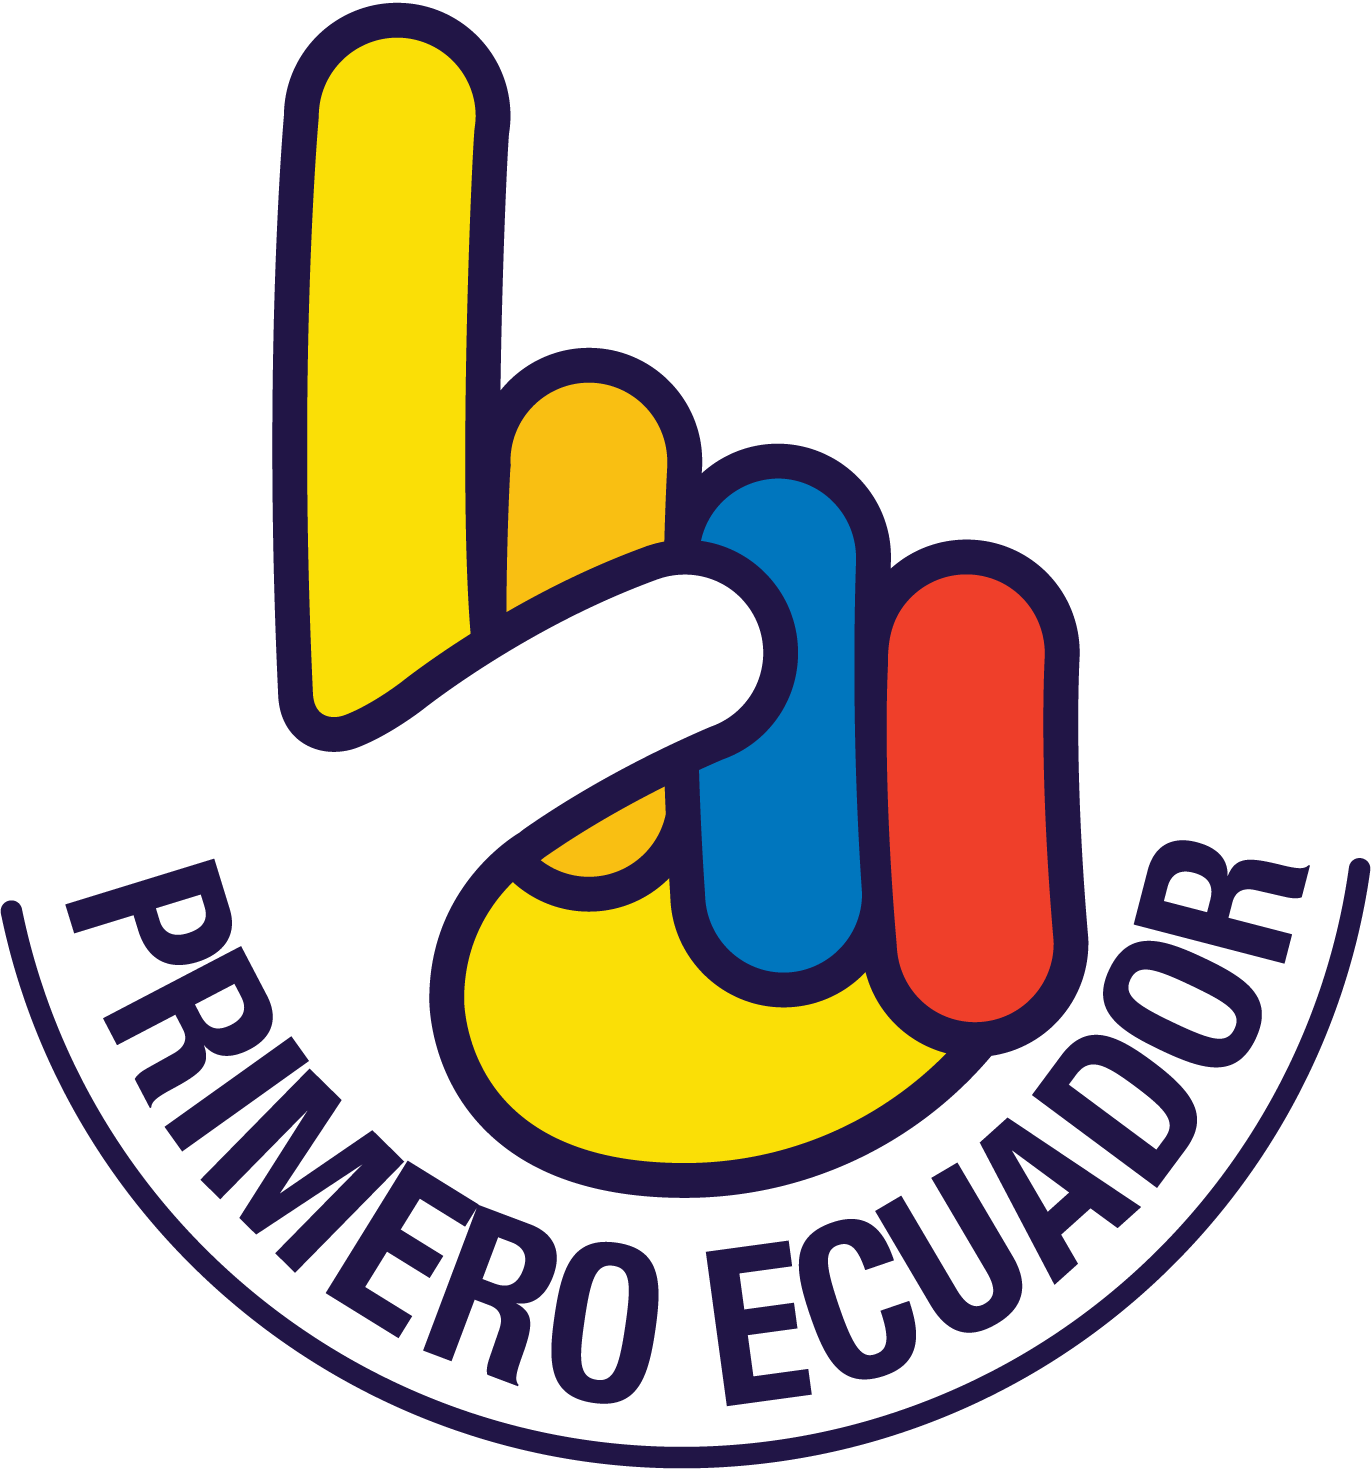 Es tl. Эквадор лого. Primero. Petroecuador логотип без фона. Логотип Junton.